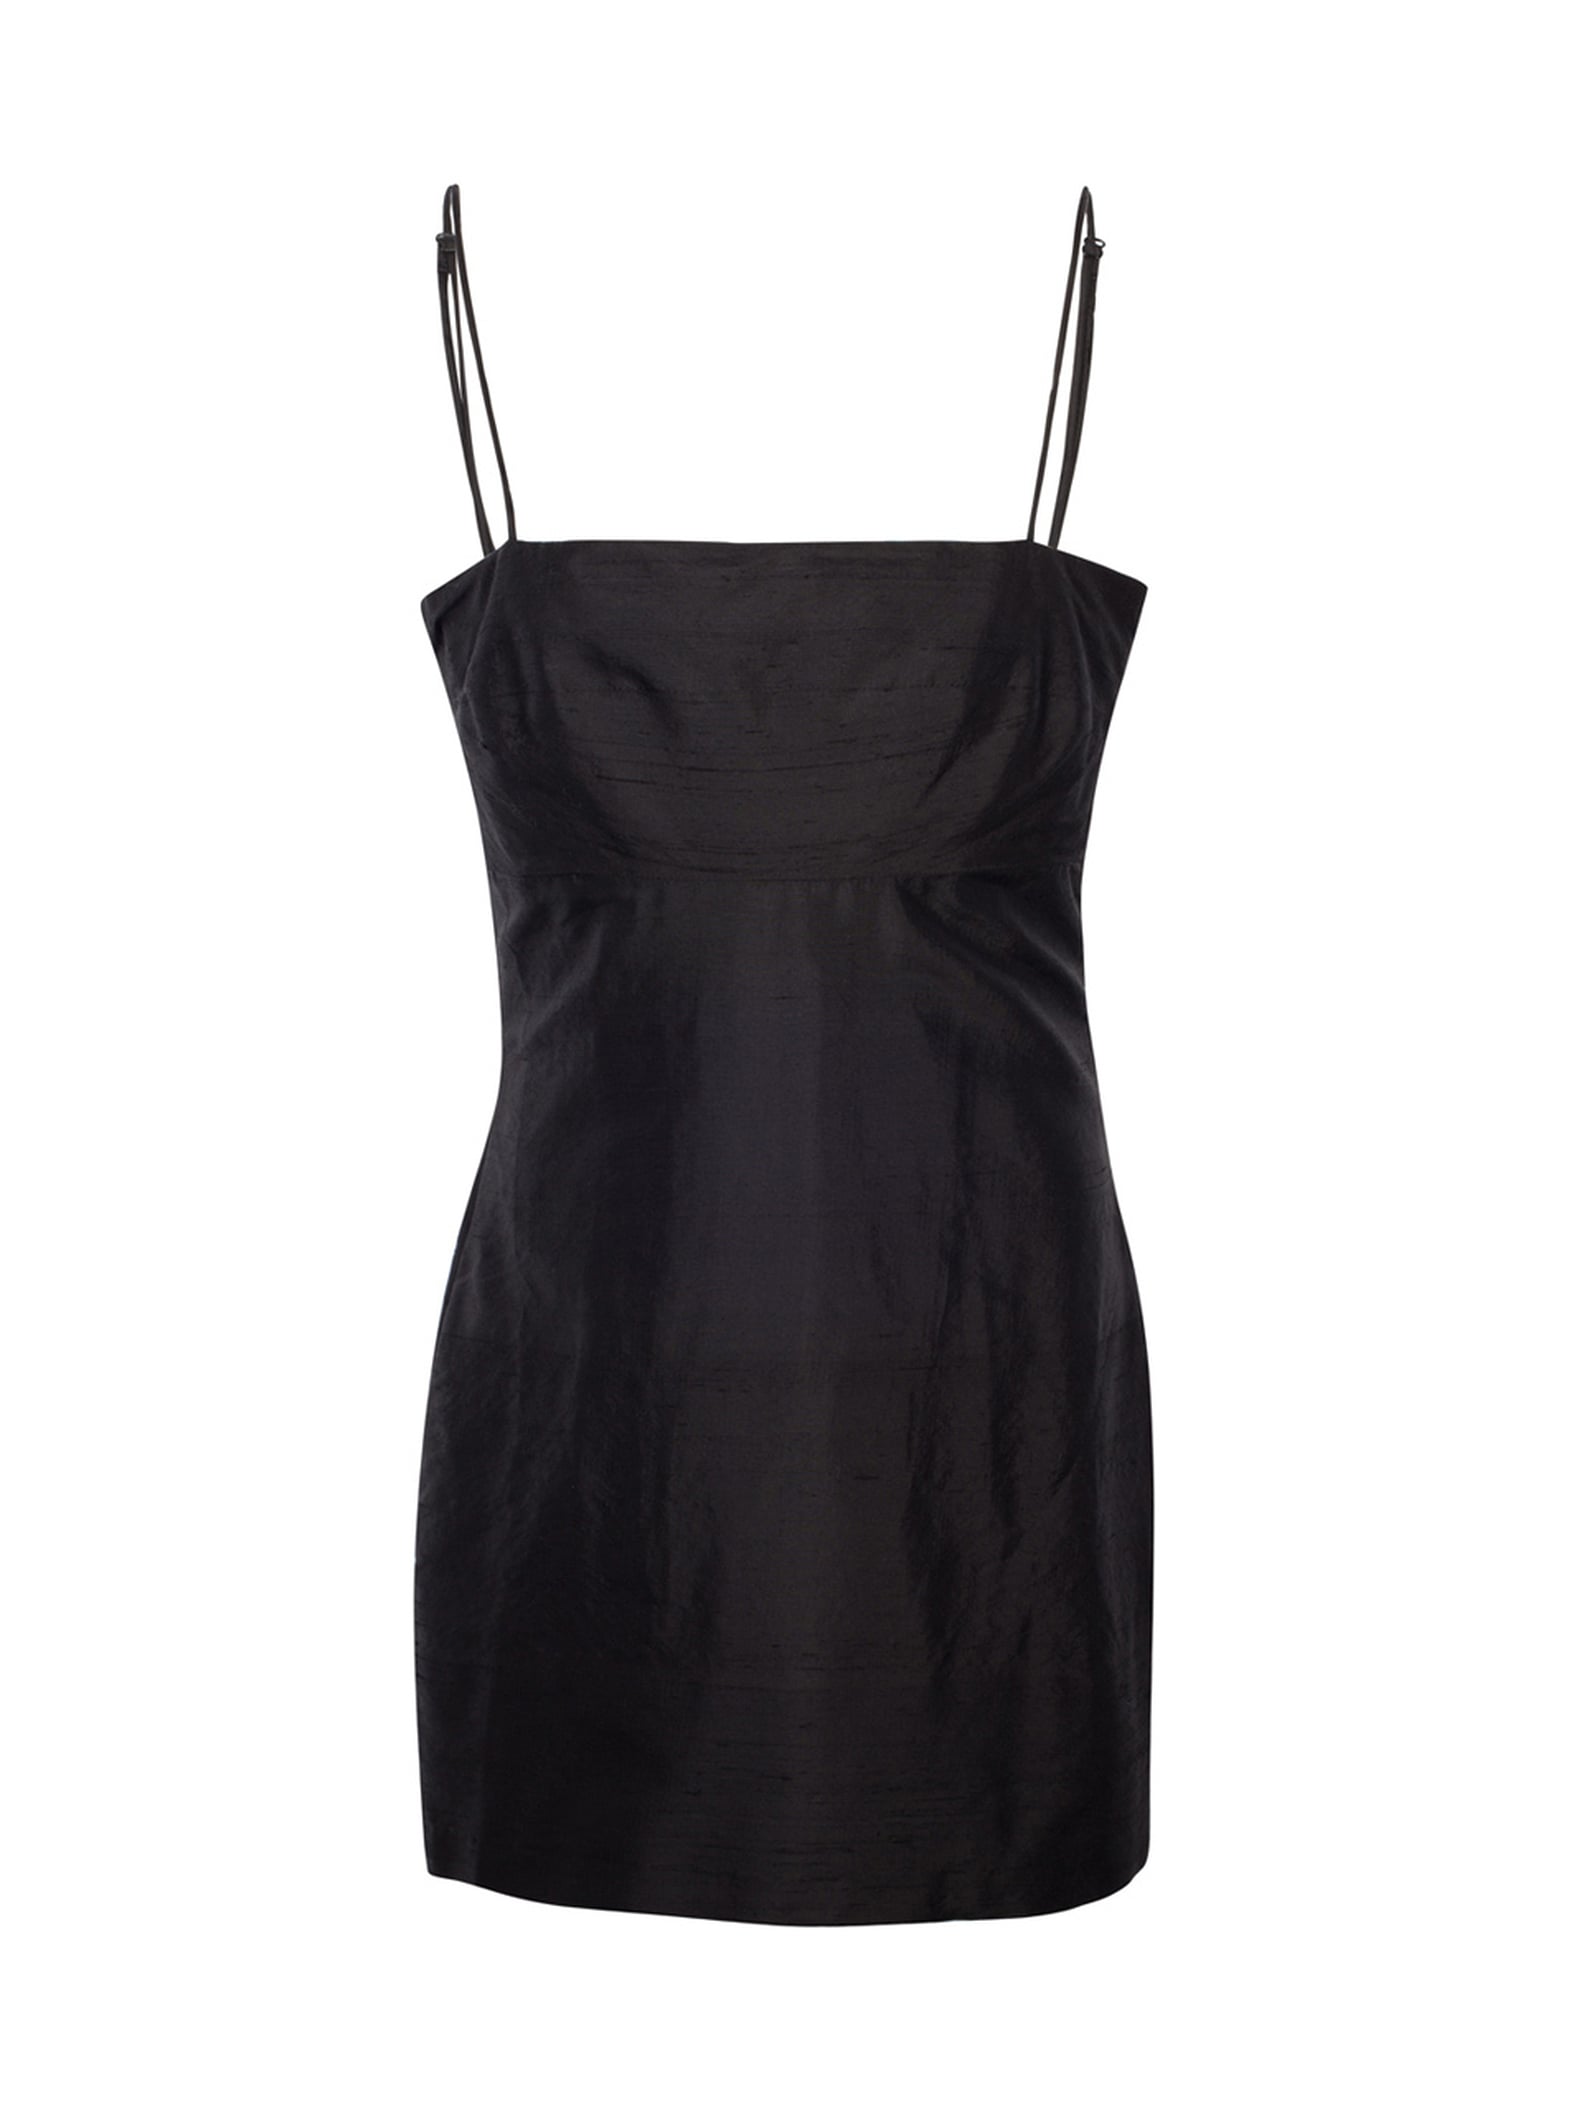 Hailey Baldwin's Black Dress and Tan Mules | POPSUGAR Fashion